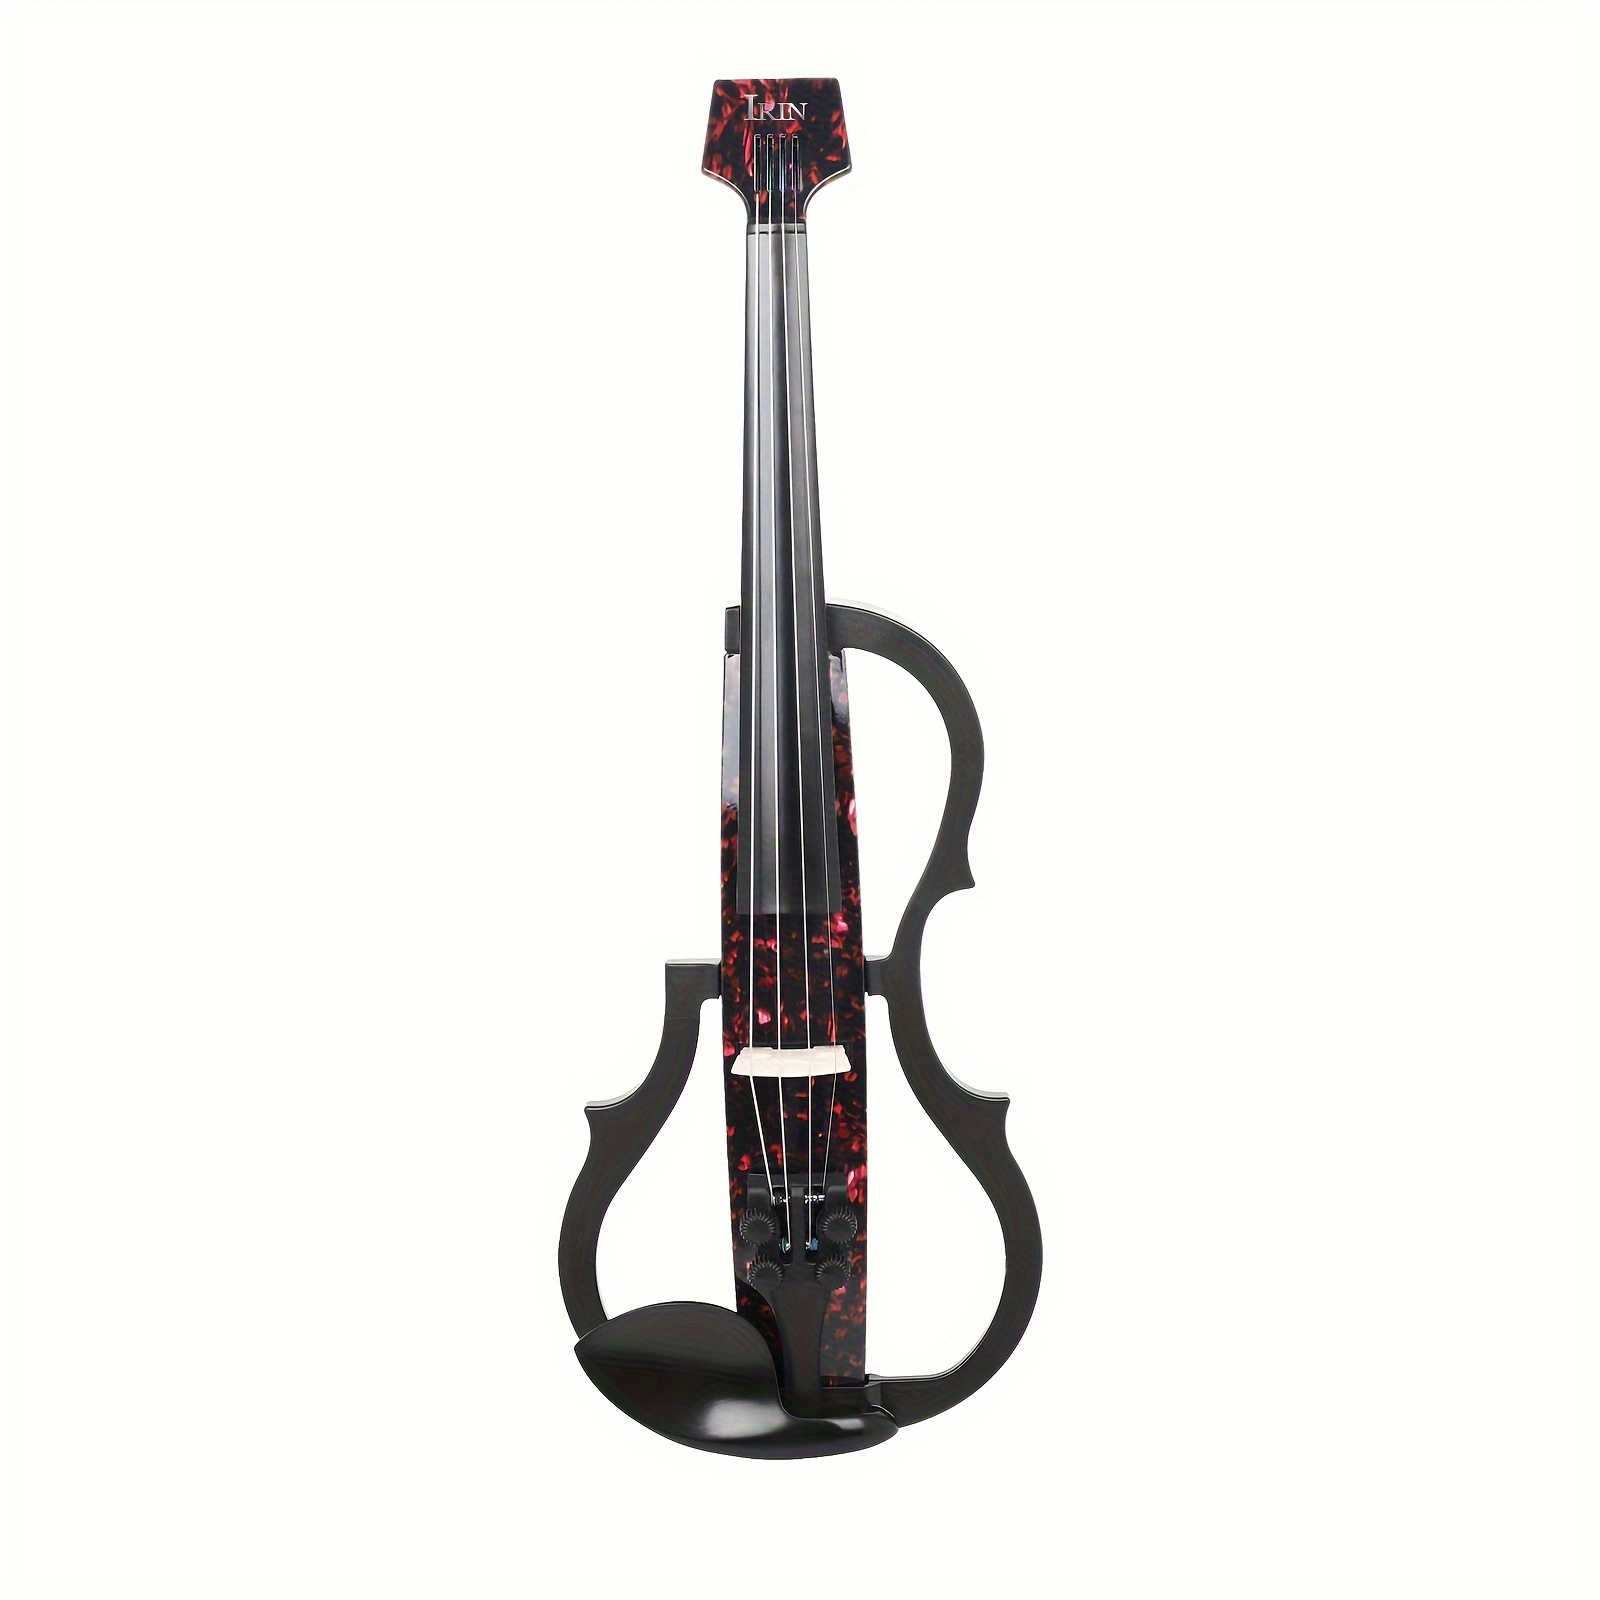 * AU-10 Intelligent 4/4 Silent Electroacoustic Violin Carbon Fiber Body ABS  Edging (With Headphones + Cable + Shoulder Rest)